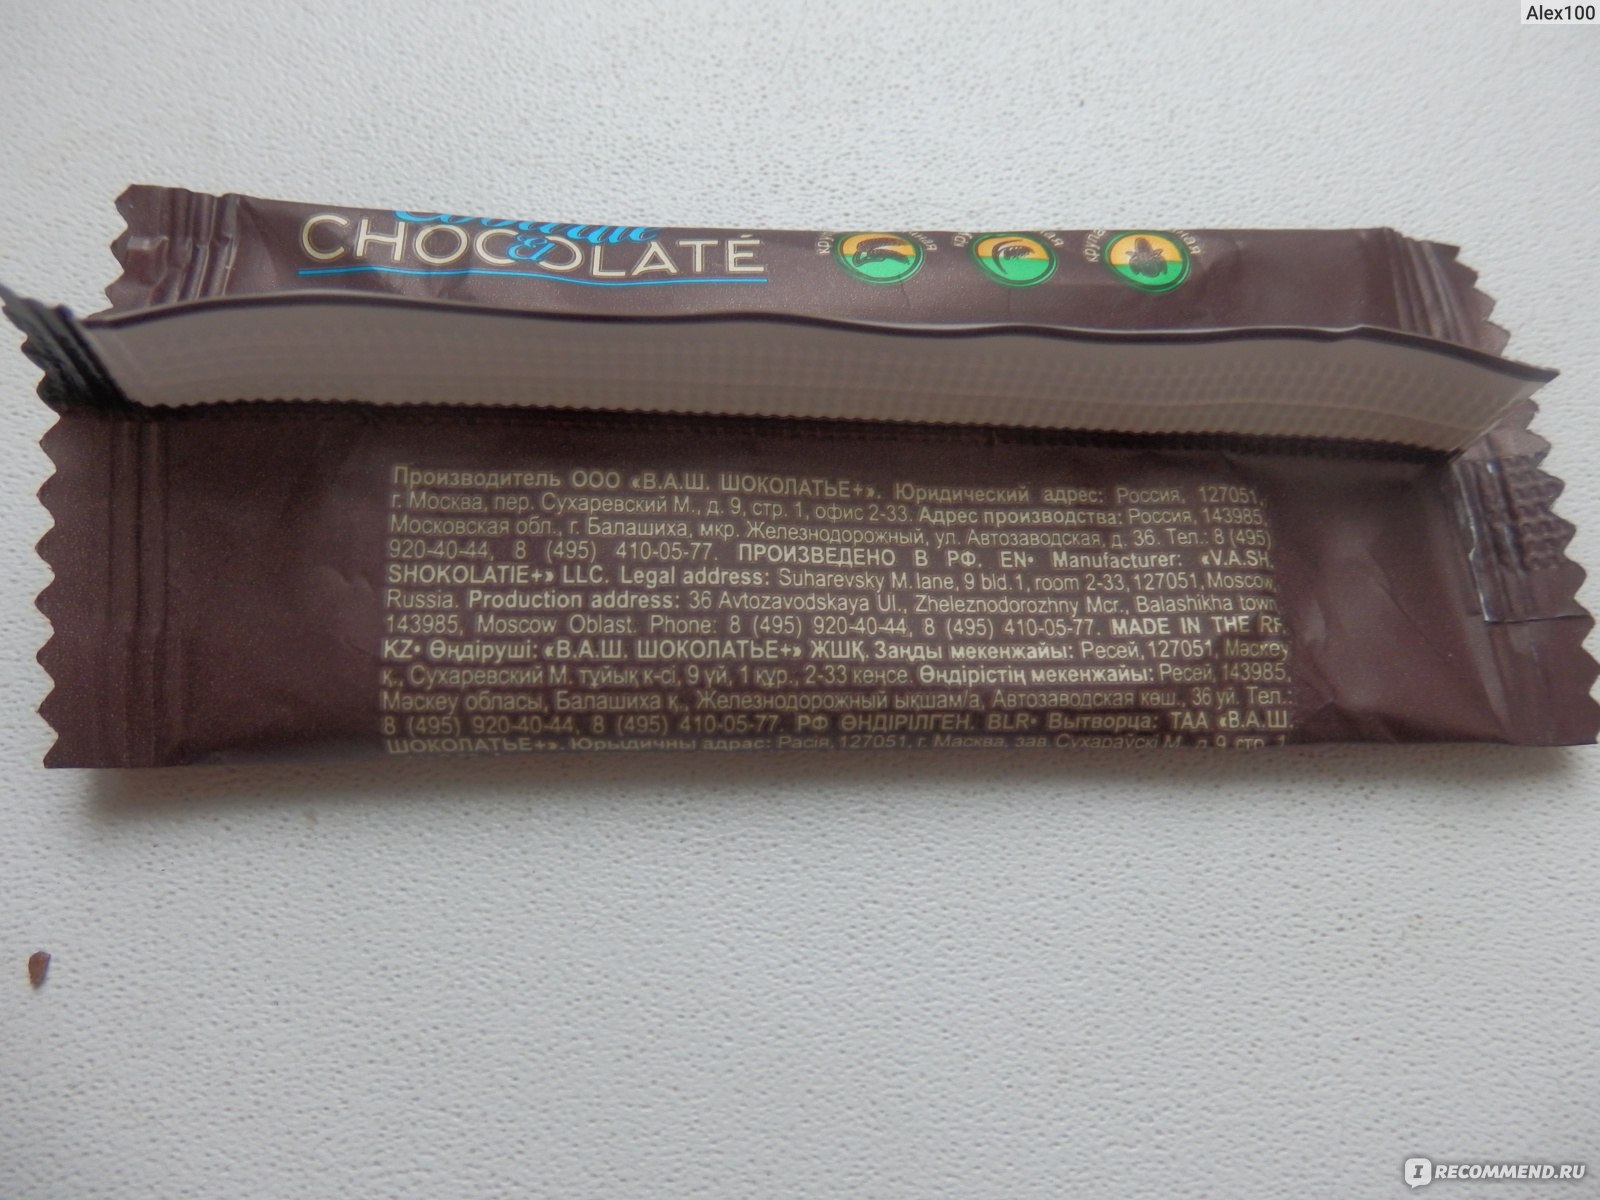 Конфеты ООО "В.А.Ш. Шоколатье" Cobarde El chocolate. Multi-cereal dark chocolate. фото